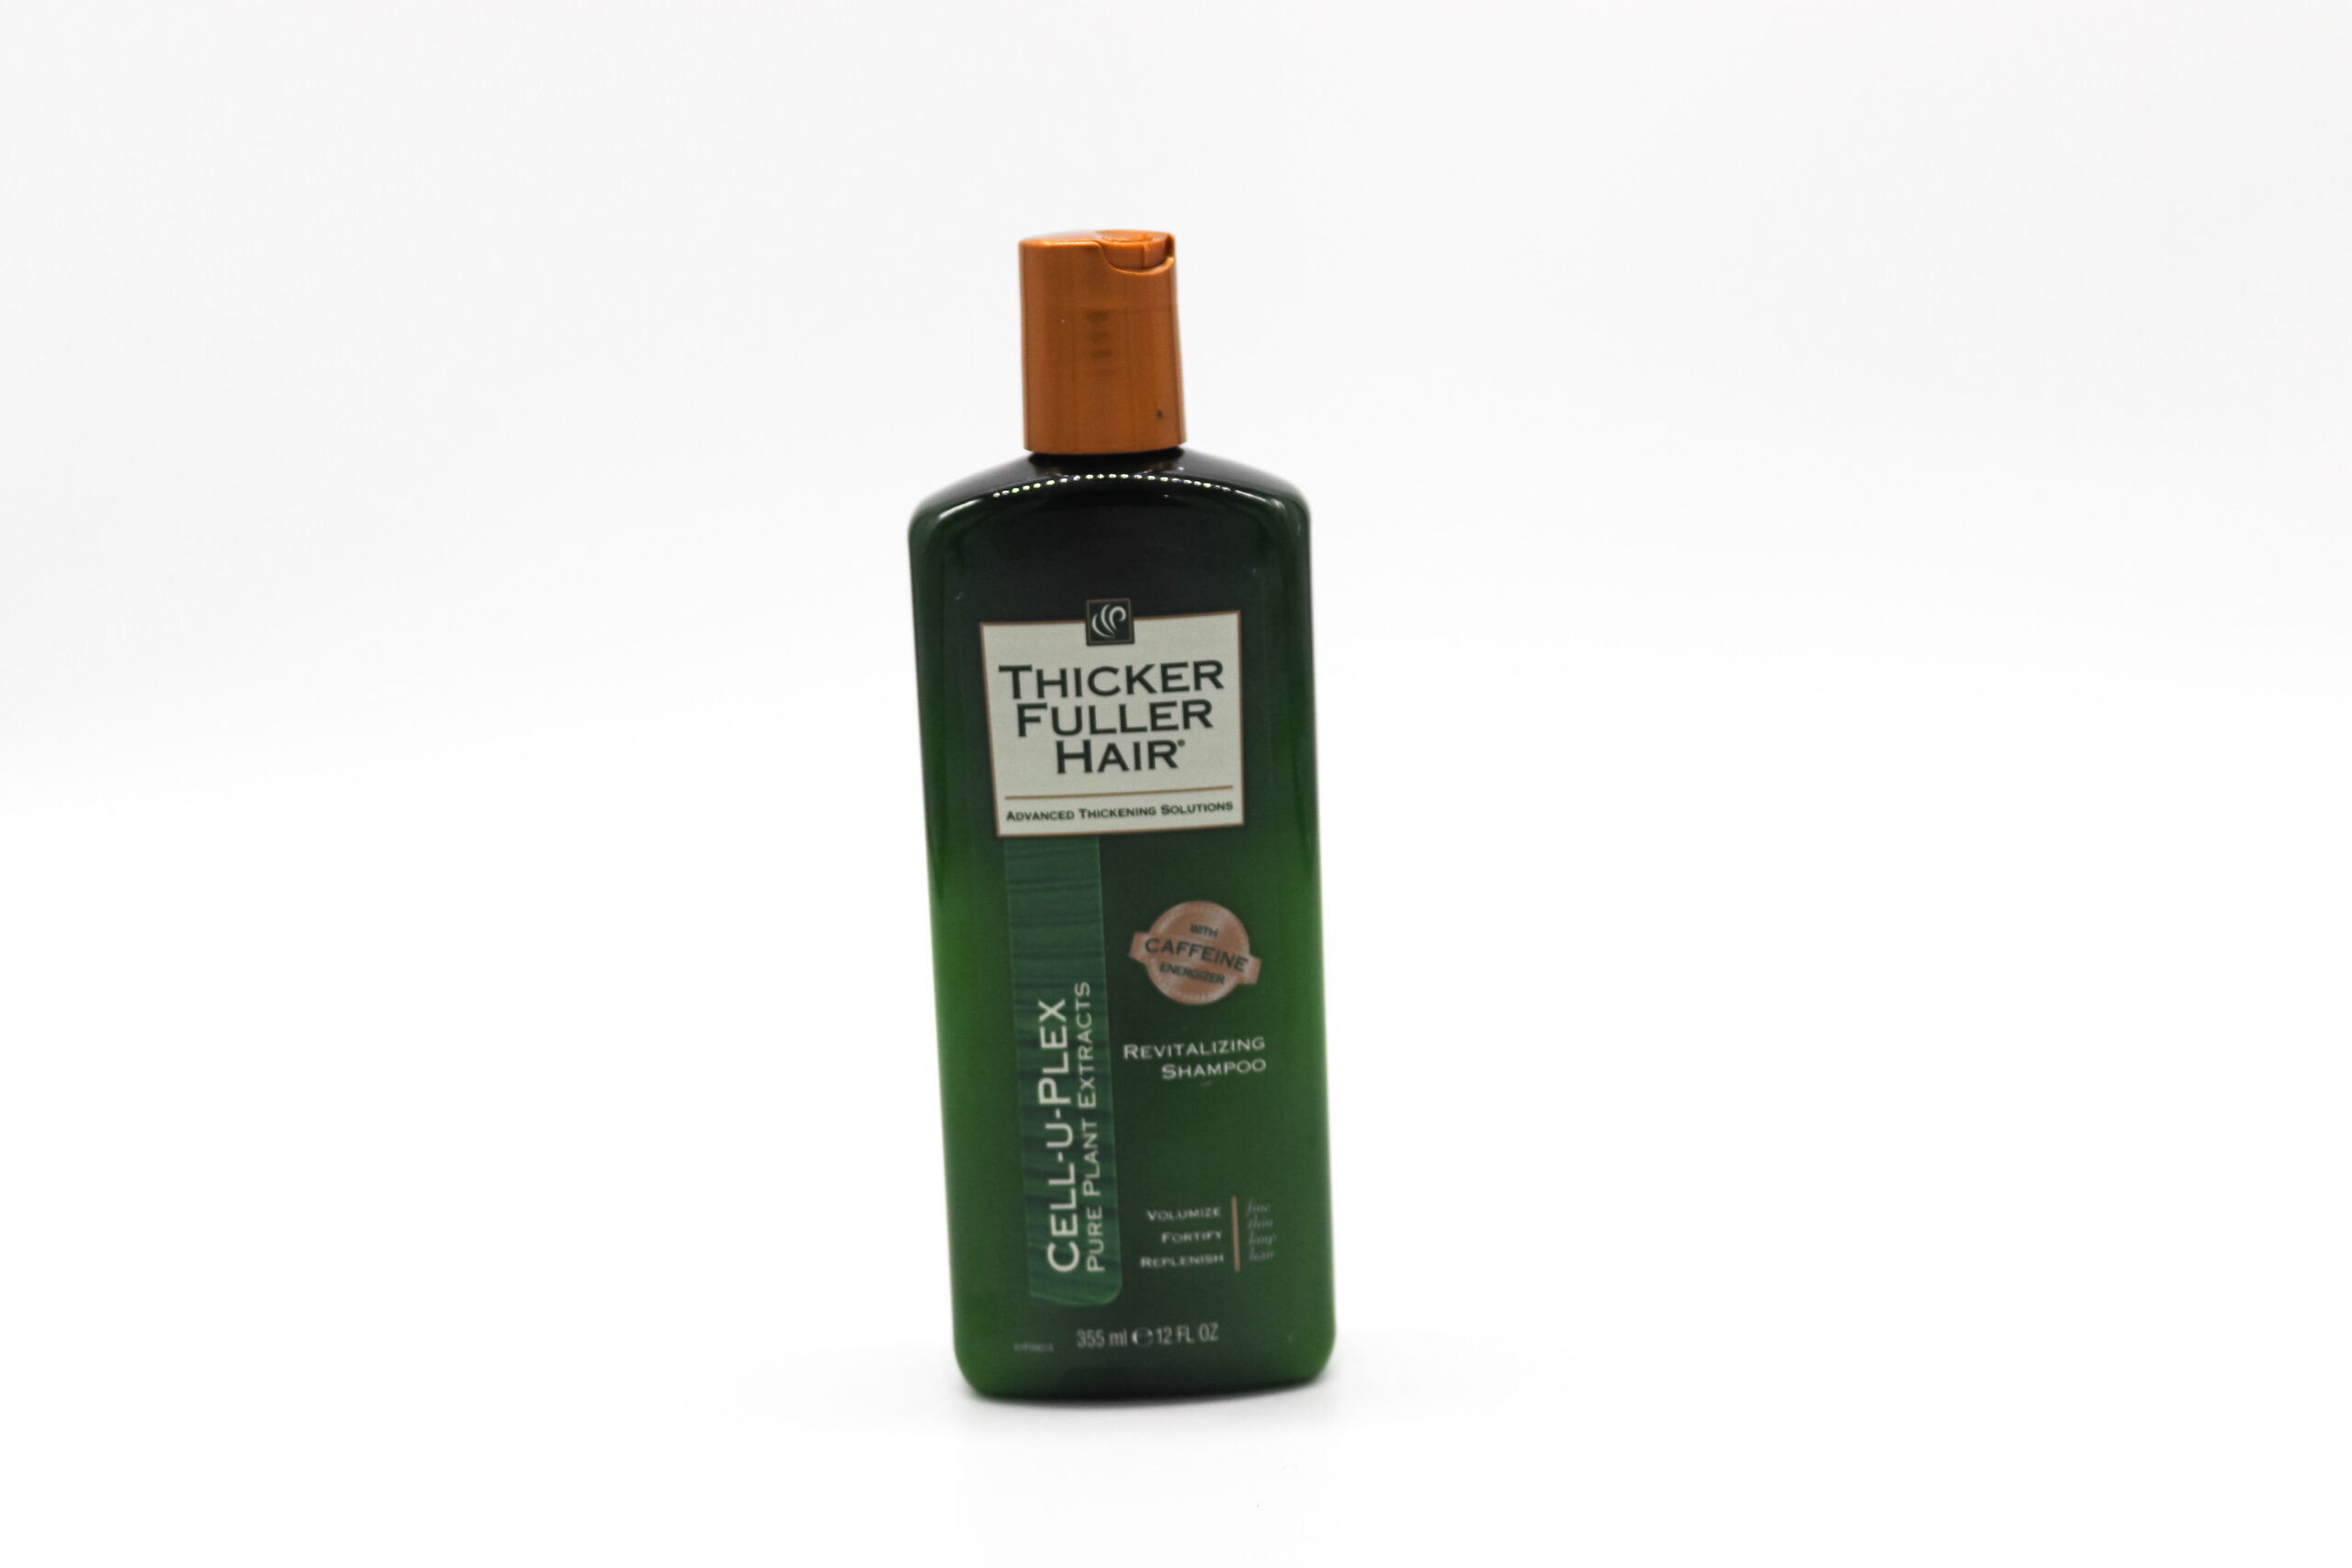 Thicker fuller hair cell-u-plex revitalizing Shampoo 12 oz - Naya London